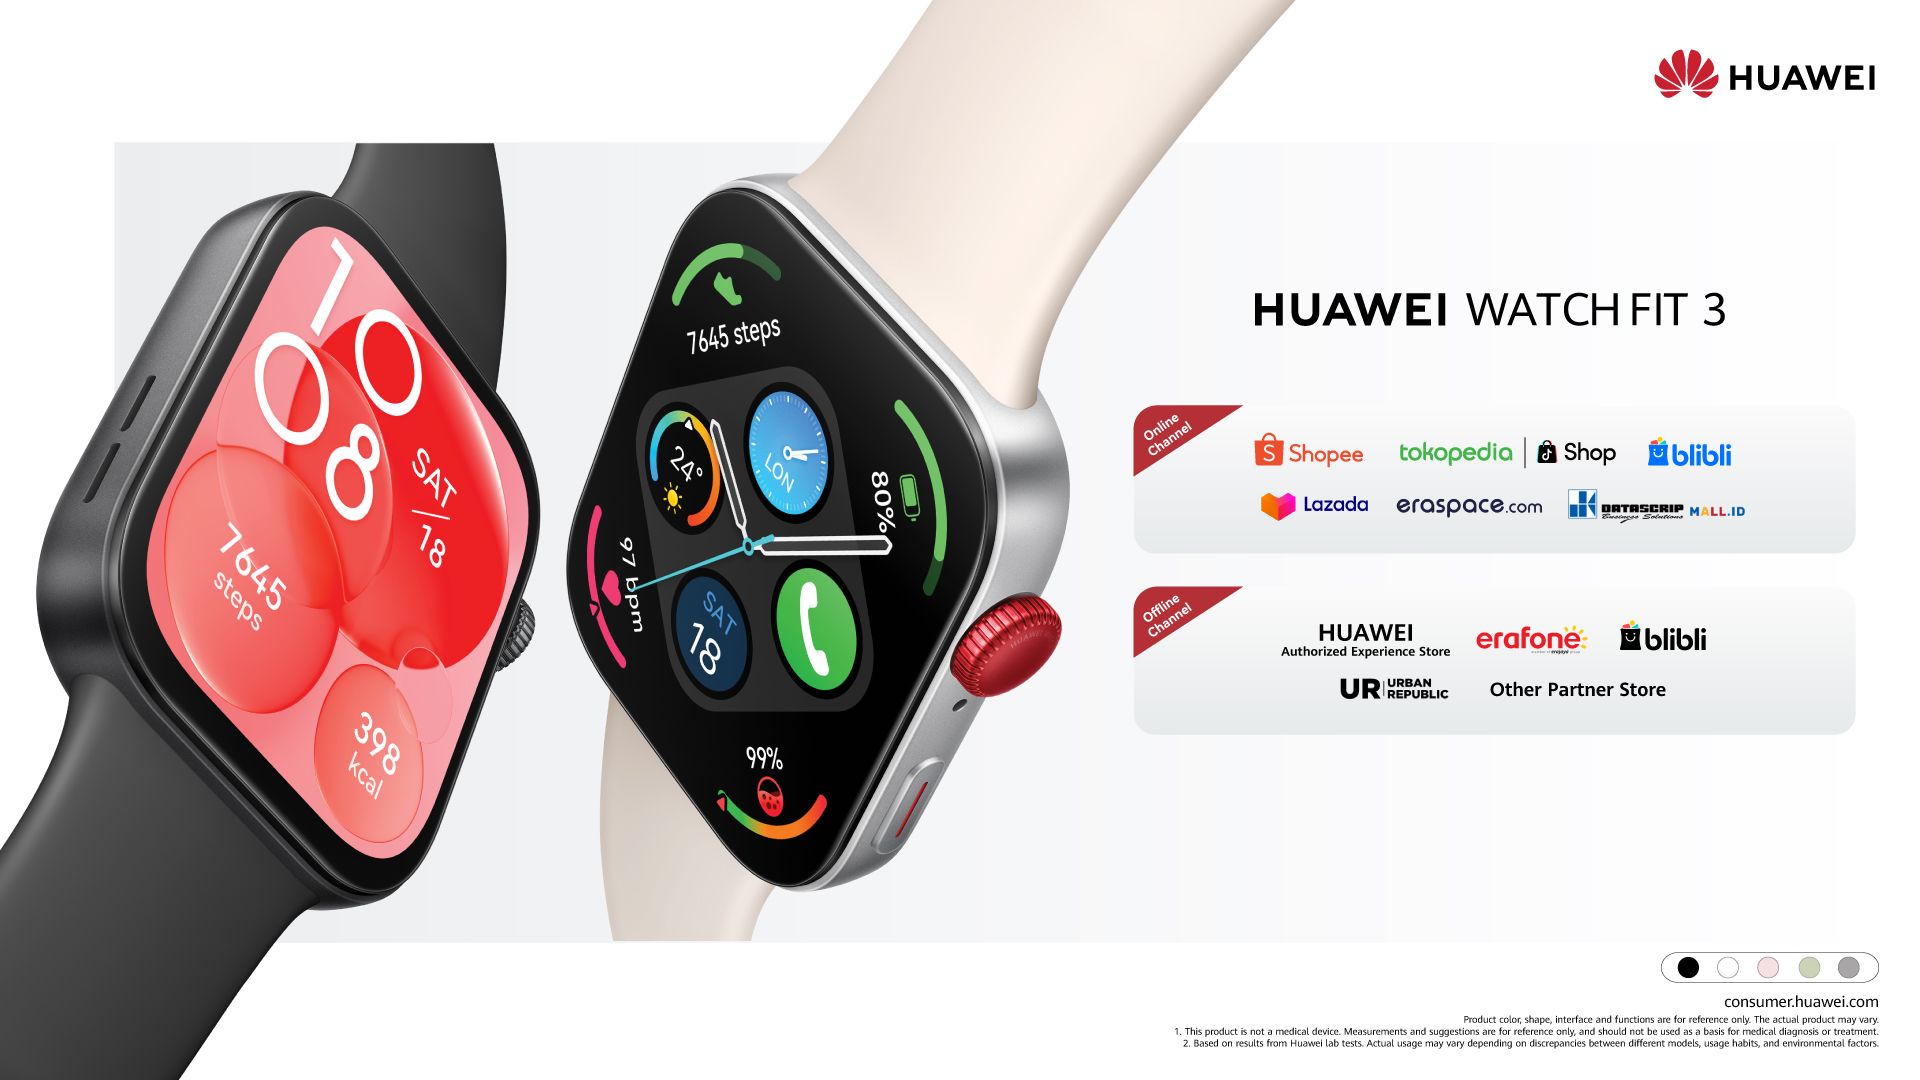 Huawei Device Indonesia resmi meluncurkan HUAWEI WATCH FIT 3 